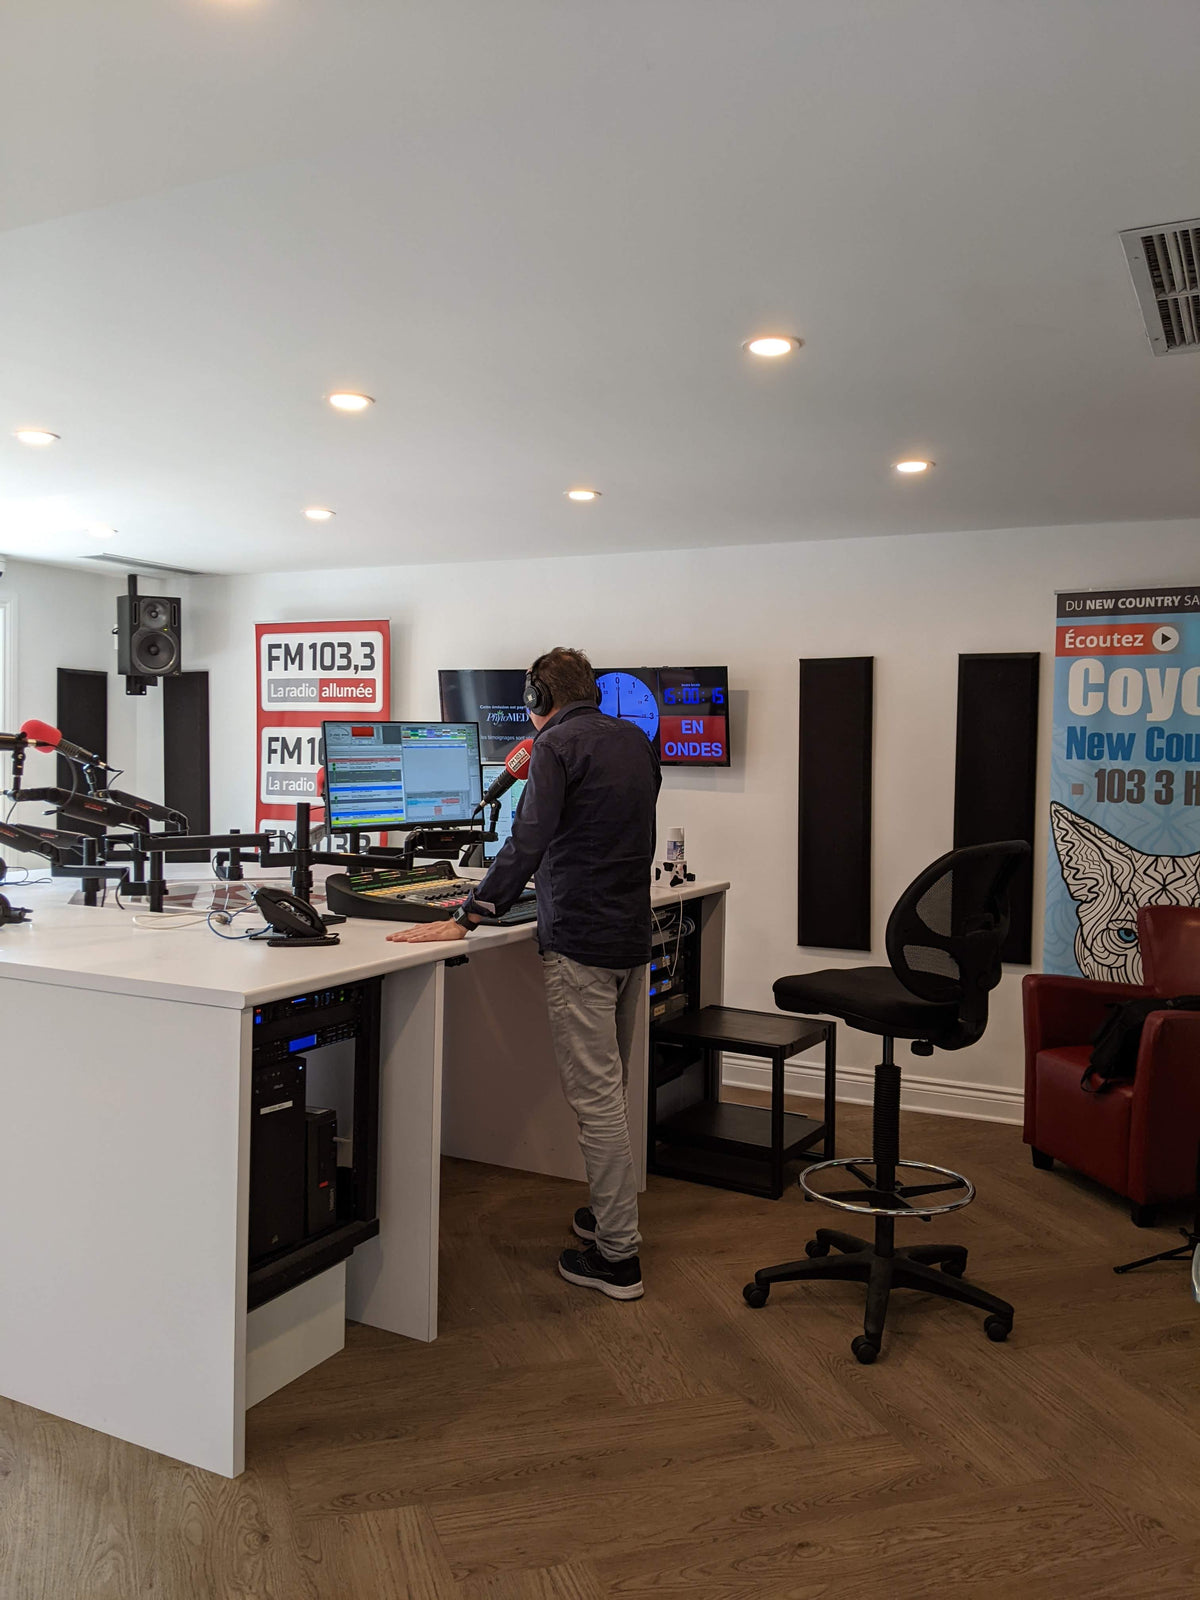 Custom Zebra Blinds Installations, Rideau Zebra Enhances FM 103.3's Studios